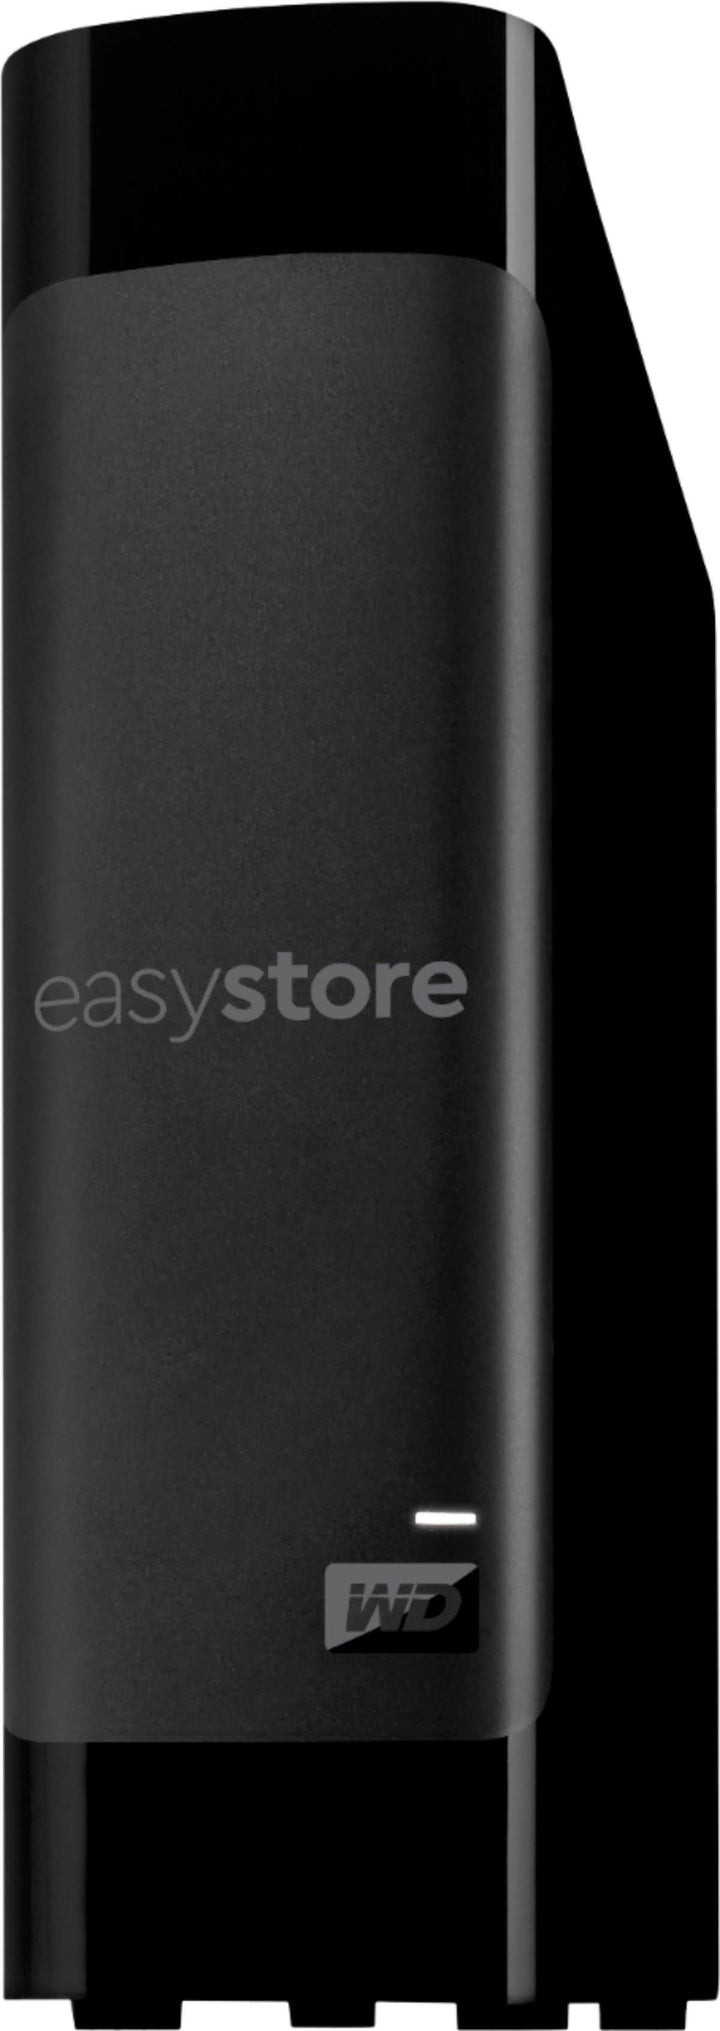 WD - easystore 16TB External USB 3.0 Hard Drive - Black_5